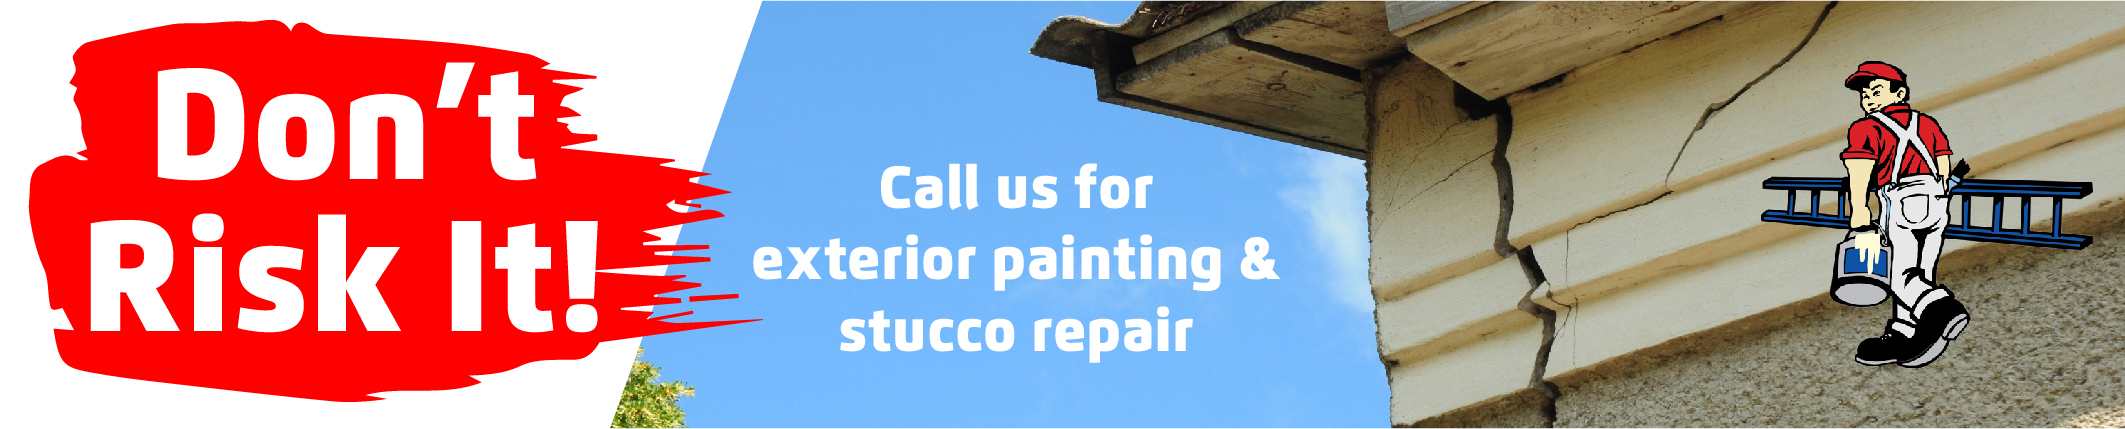 emergency stucco repair company in Rio Rancho NM 87124